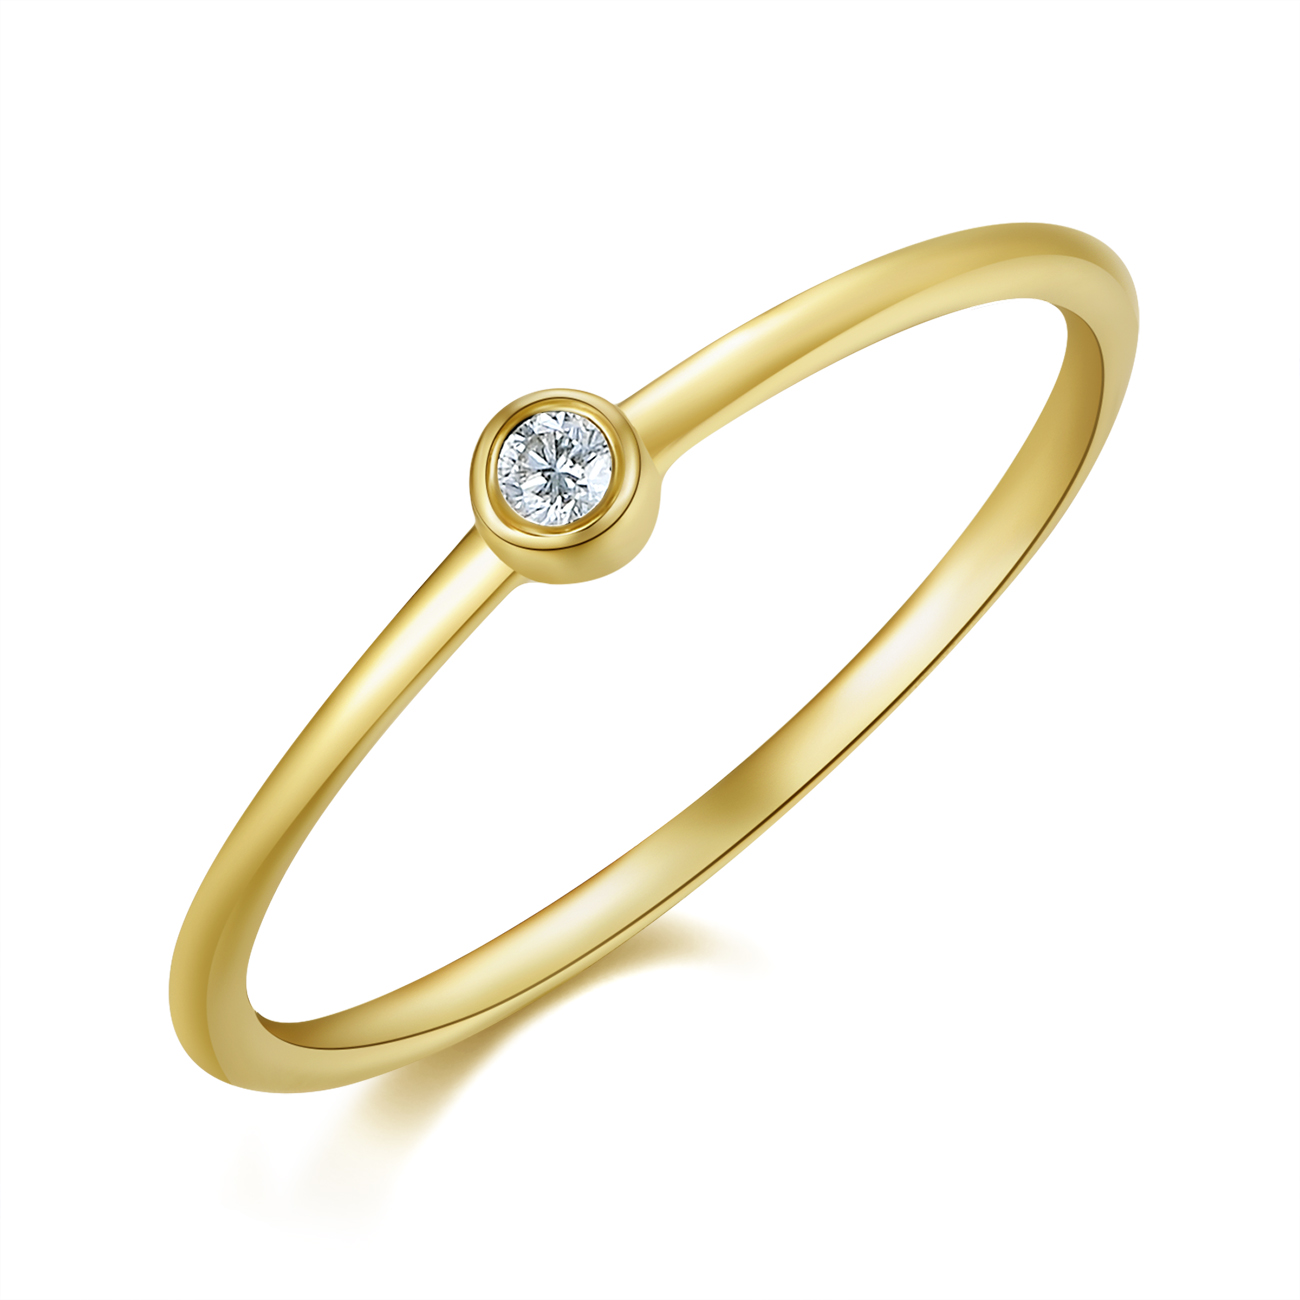 Buy 1250+ Diamond Rings Online | BlueStone.com - India's #1 Online  Jewellery Brand